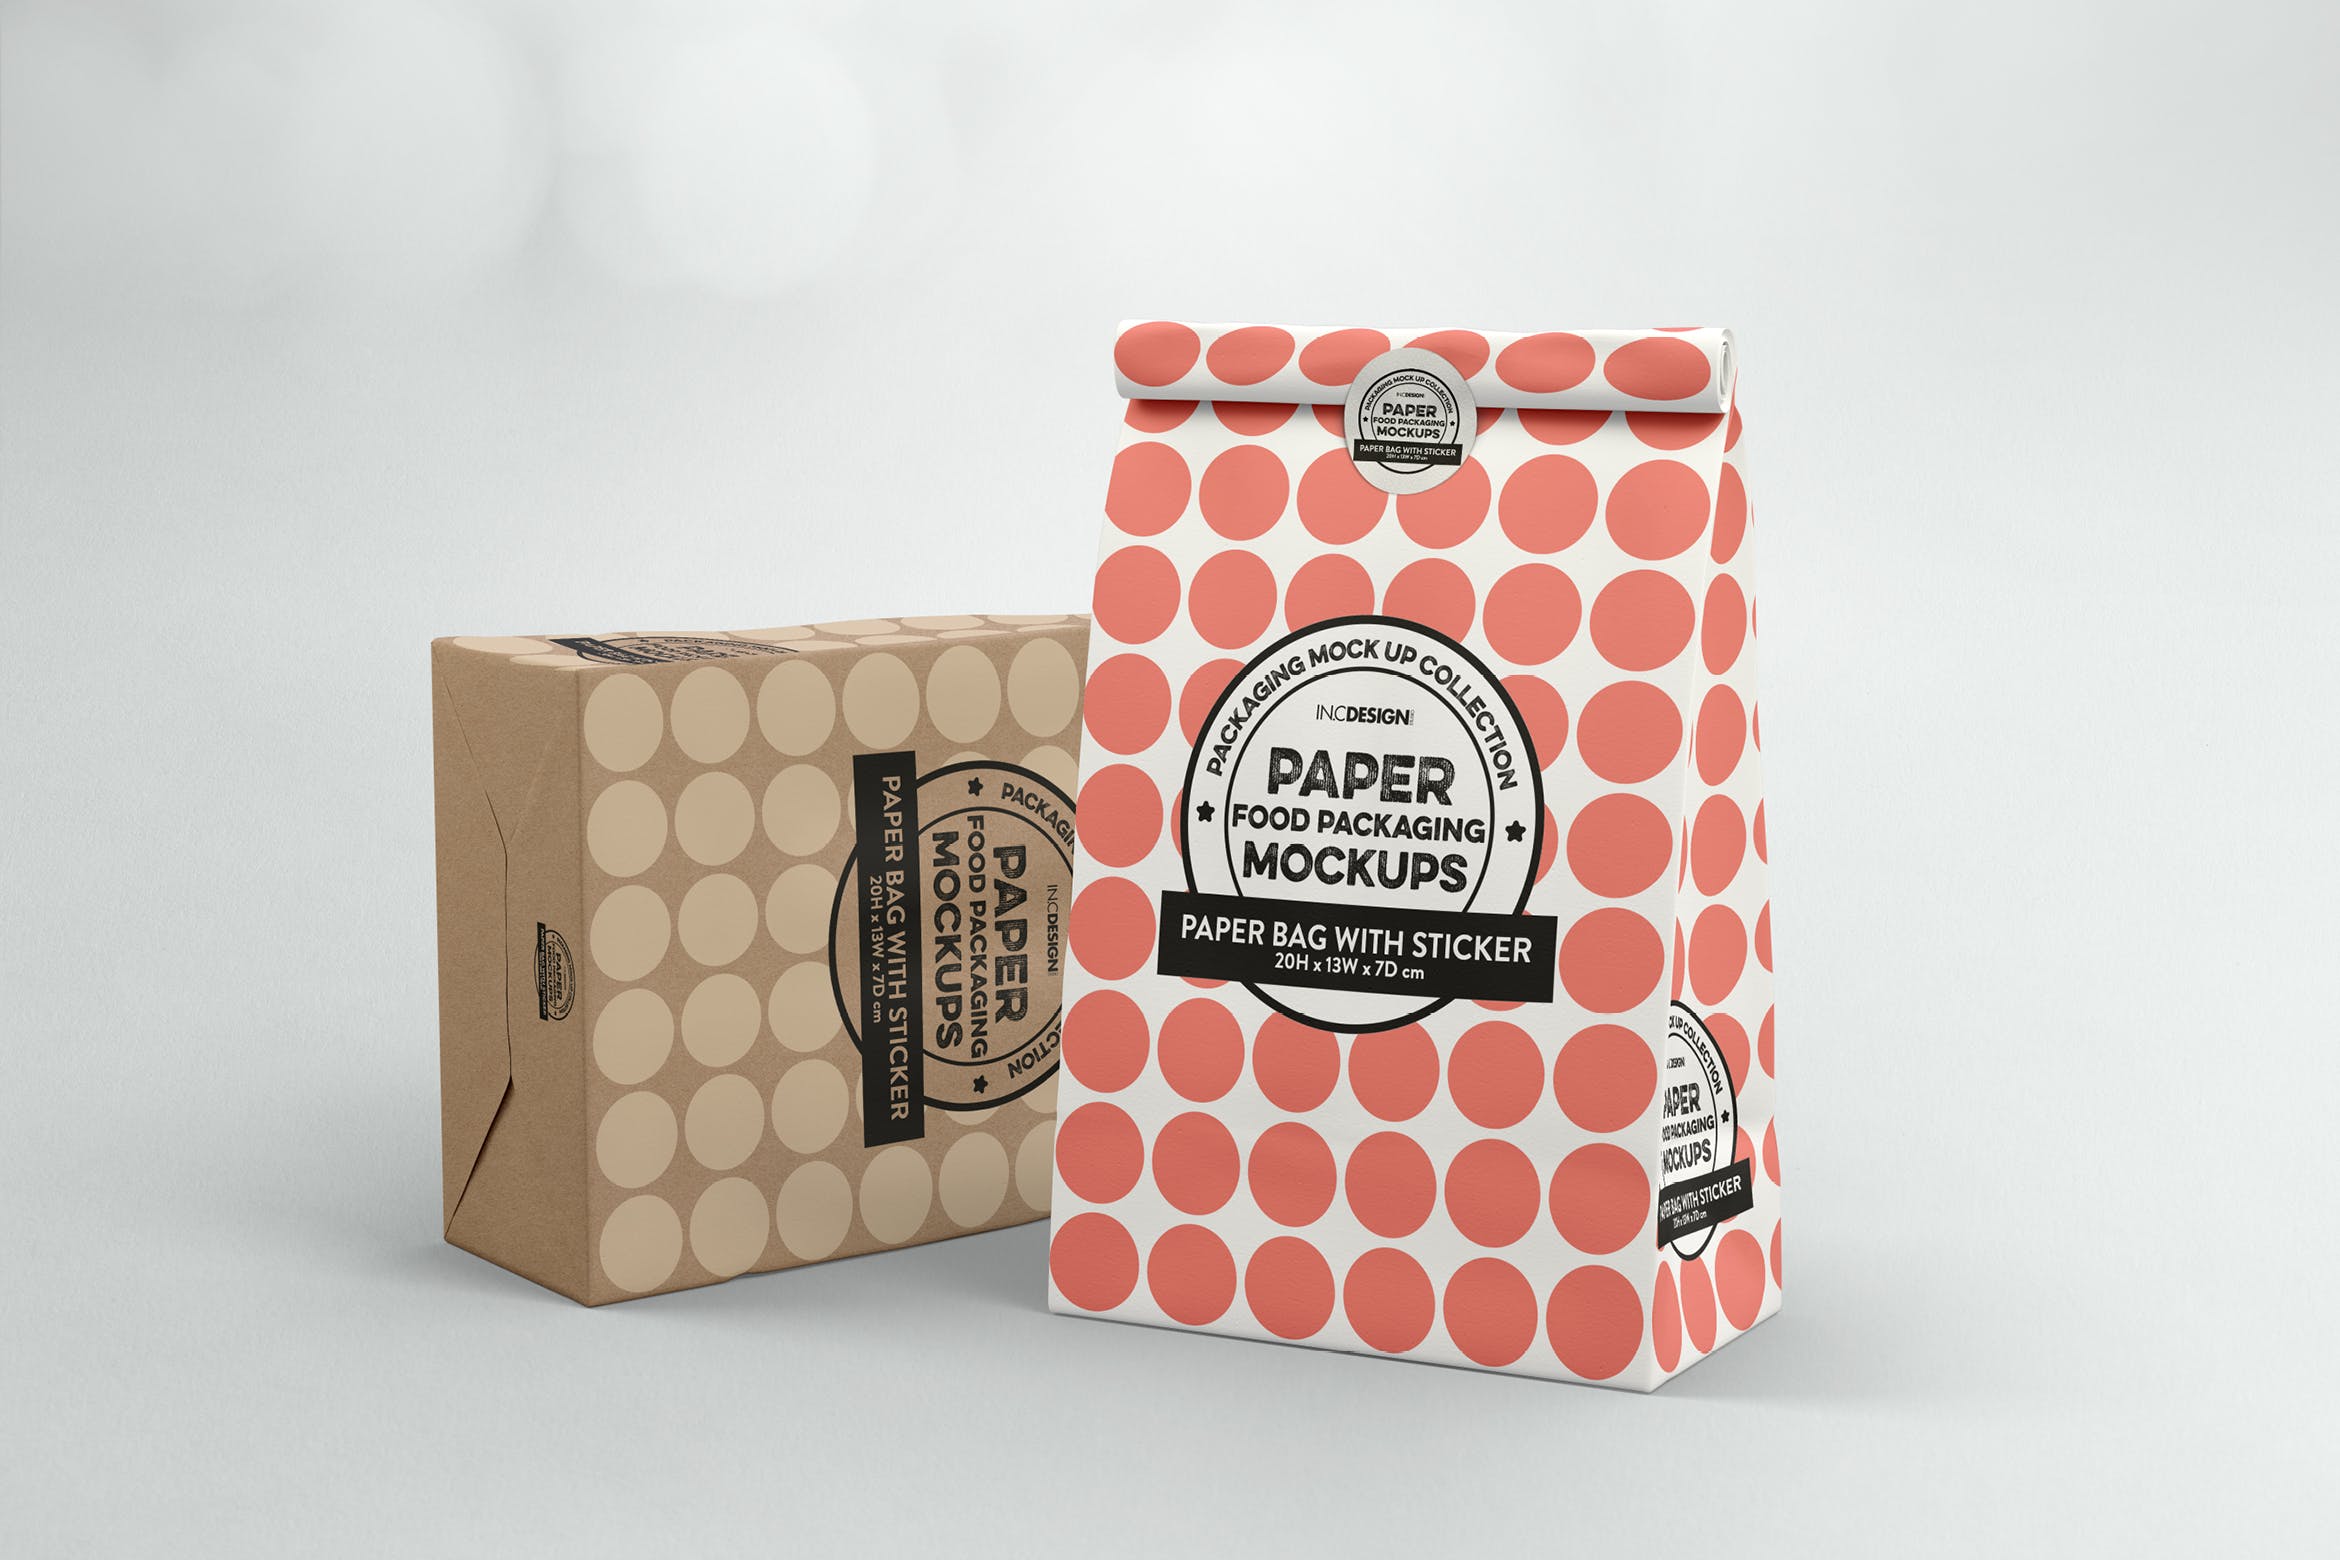 贴纸密封包装纸袋设计效果图第一素材精选 Paper Bag with sticker Seal Packaging Mockup插图